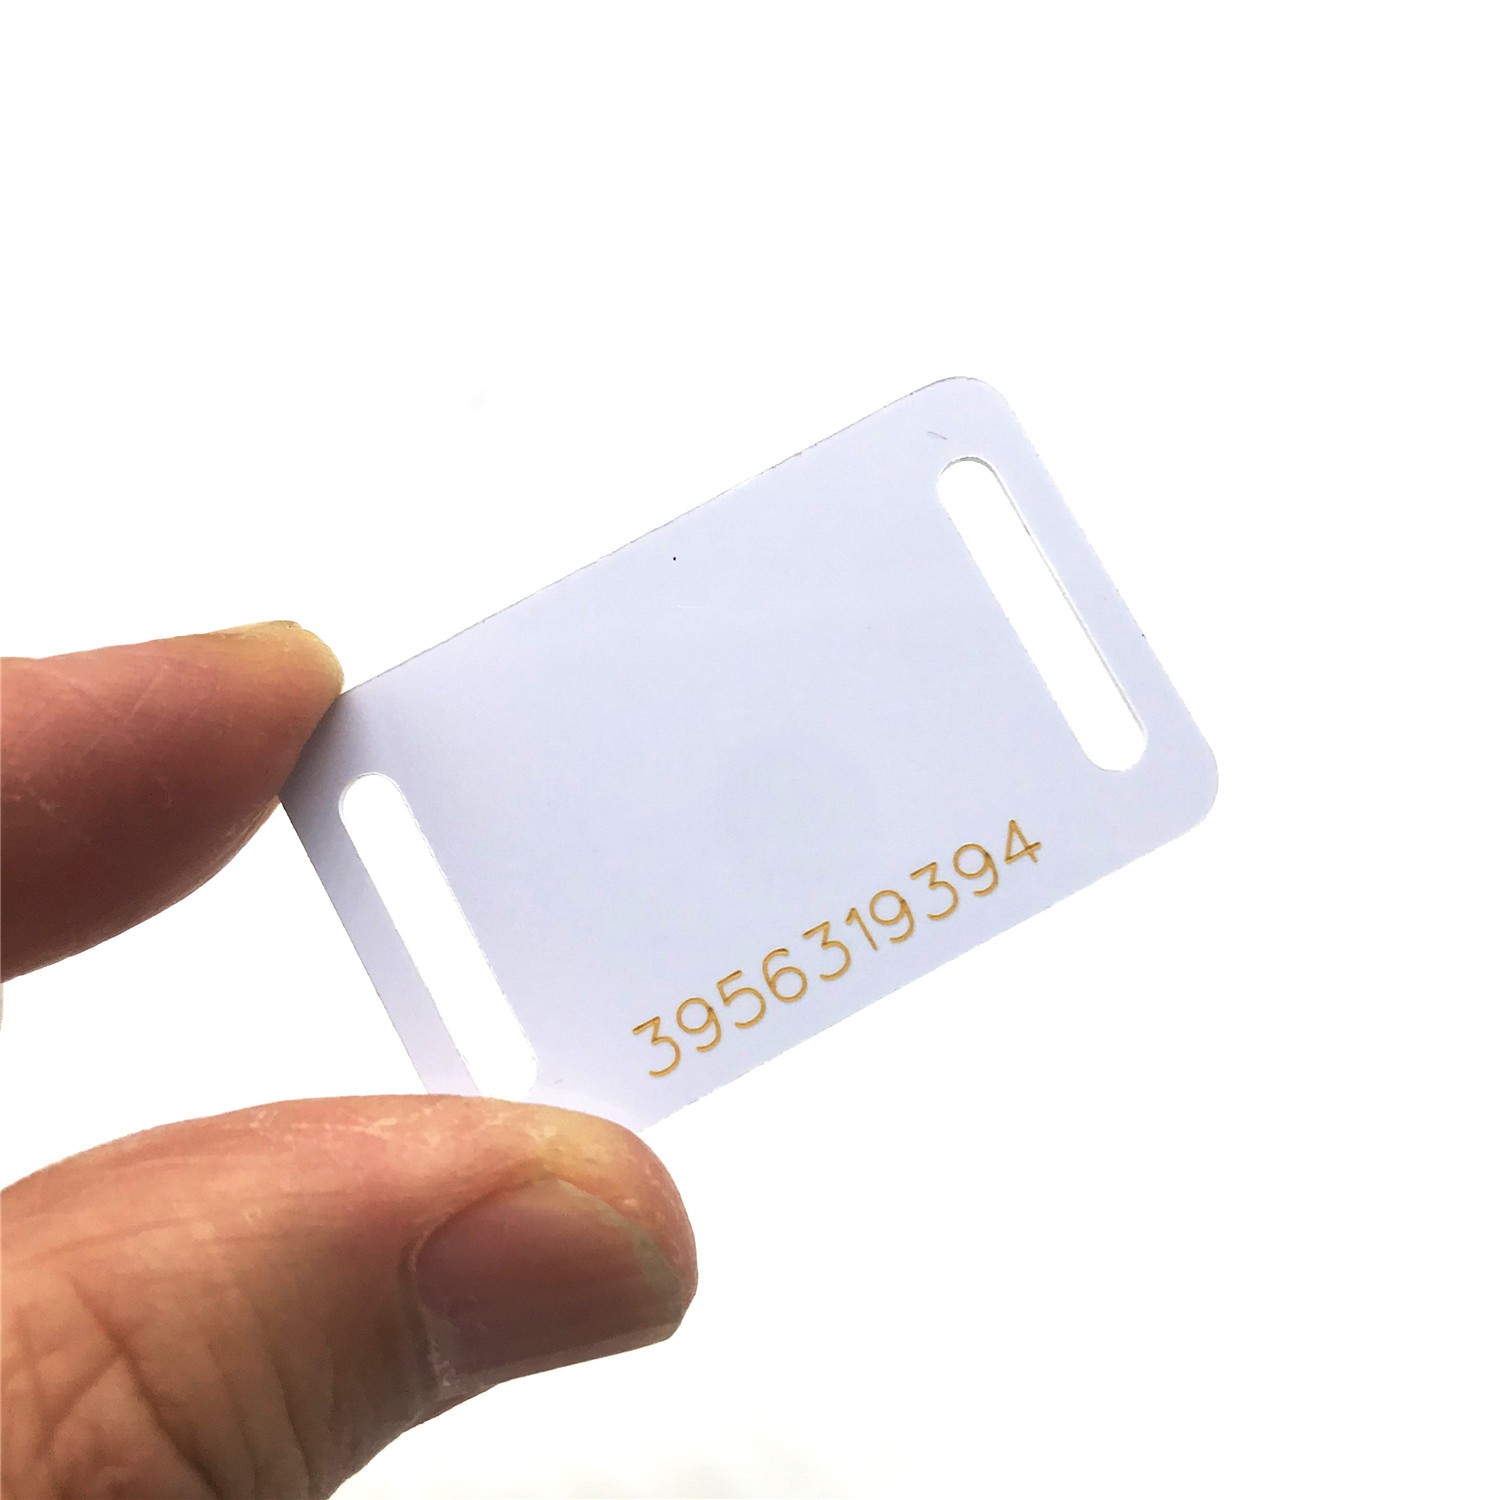 Cumpărați Card RFID personalizat,Card RFID personalizat Preț,Card RFID personalizat Marci,Card RFID personalizat Producător,Card RFID personalizat Citate,Card RFID personalizat Companie